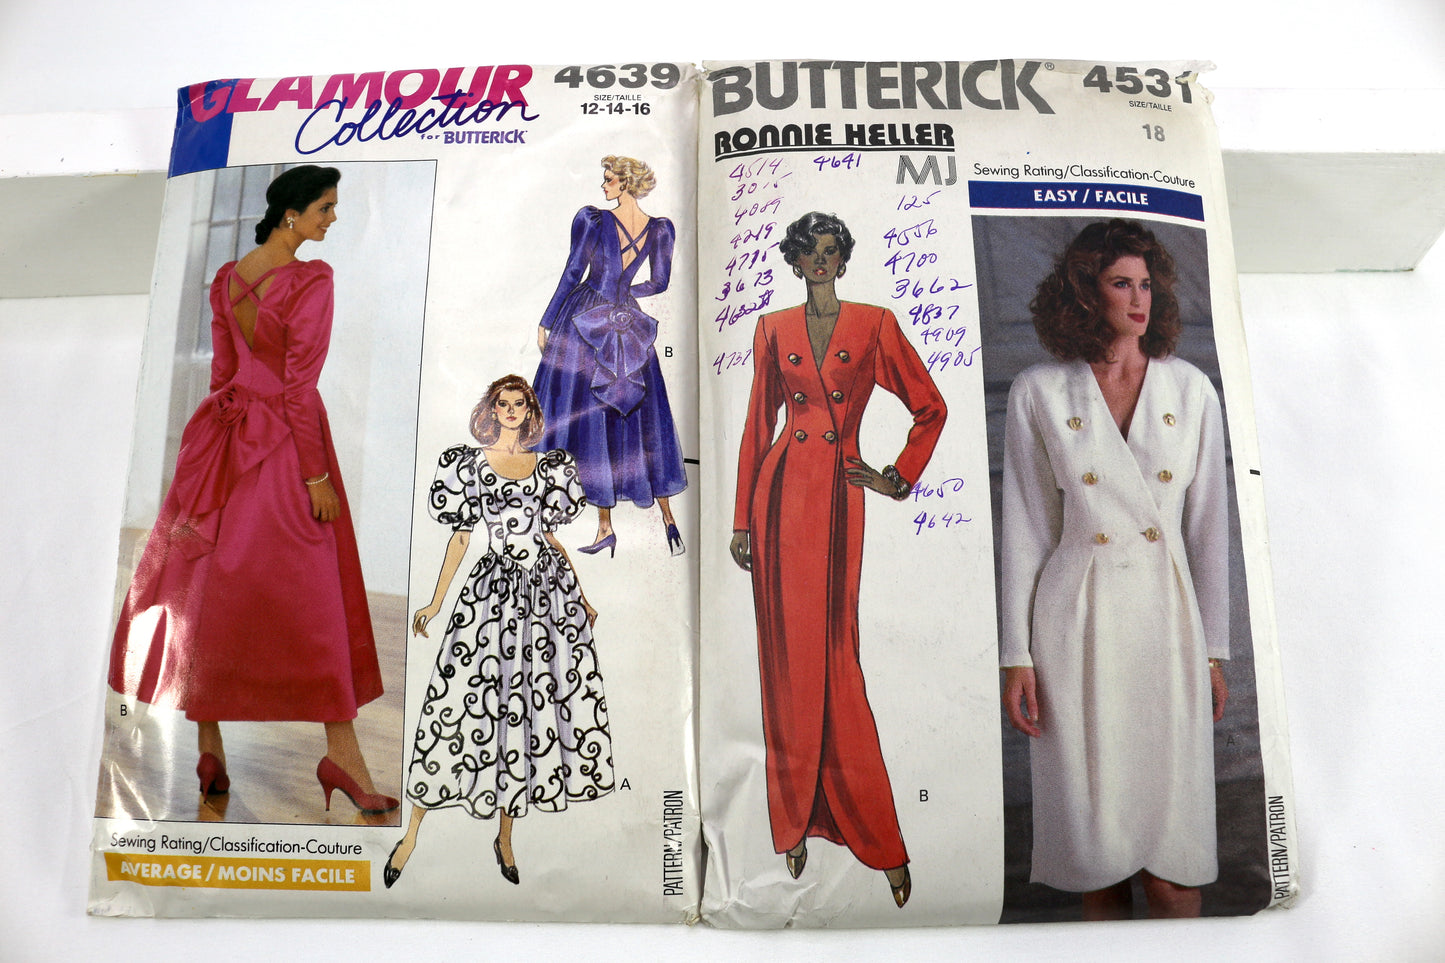 Butterick 4639 Dress Sewing Pattern or Butterick 4531 Dress Sewing Pattern